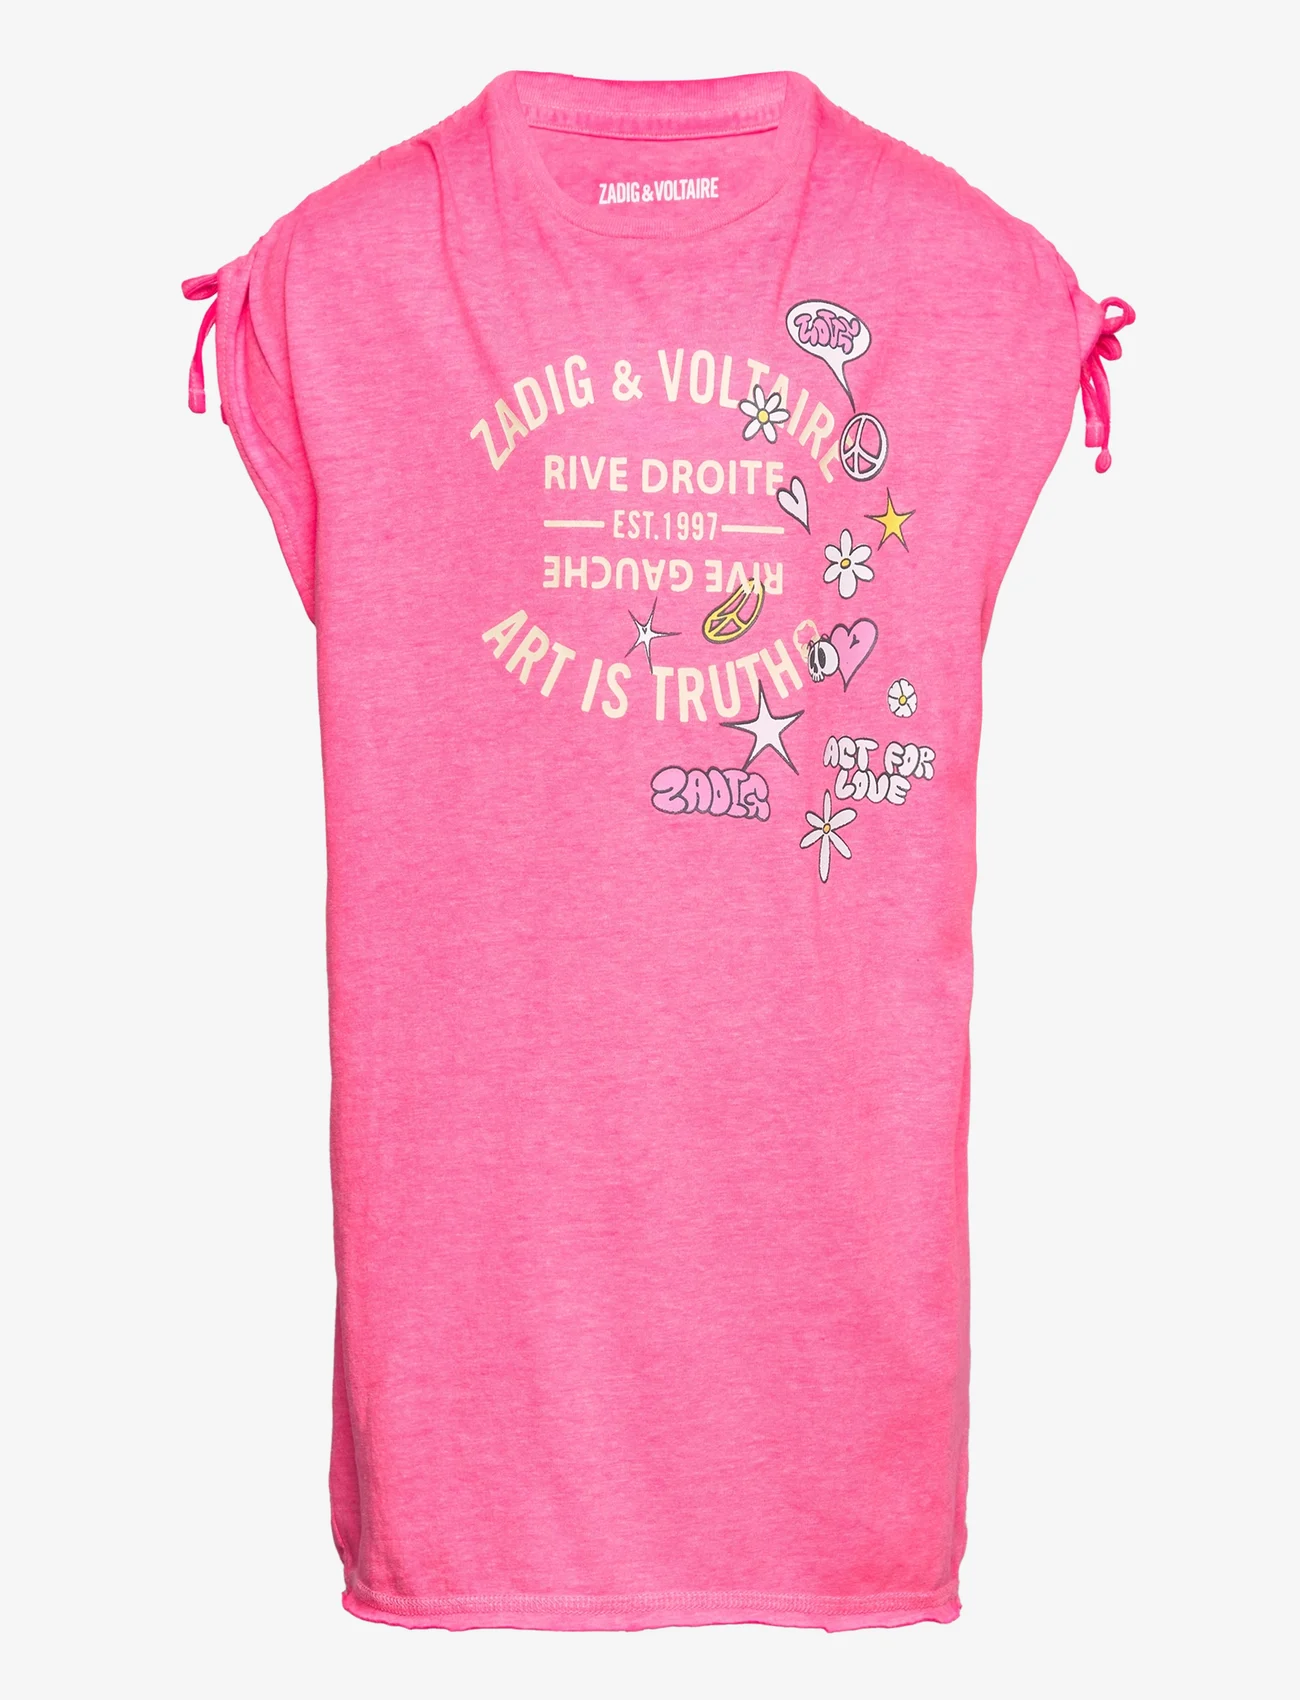 Zadig & Voltaire Kids - DRESS - short-sleeved casual dresses - pink blush - 0